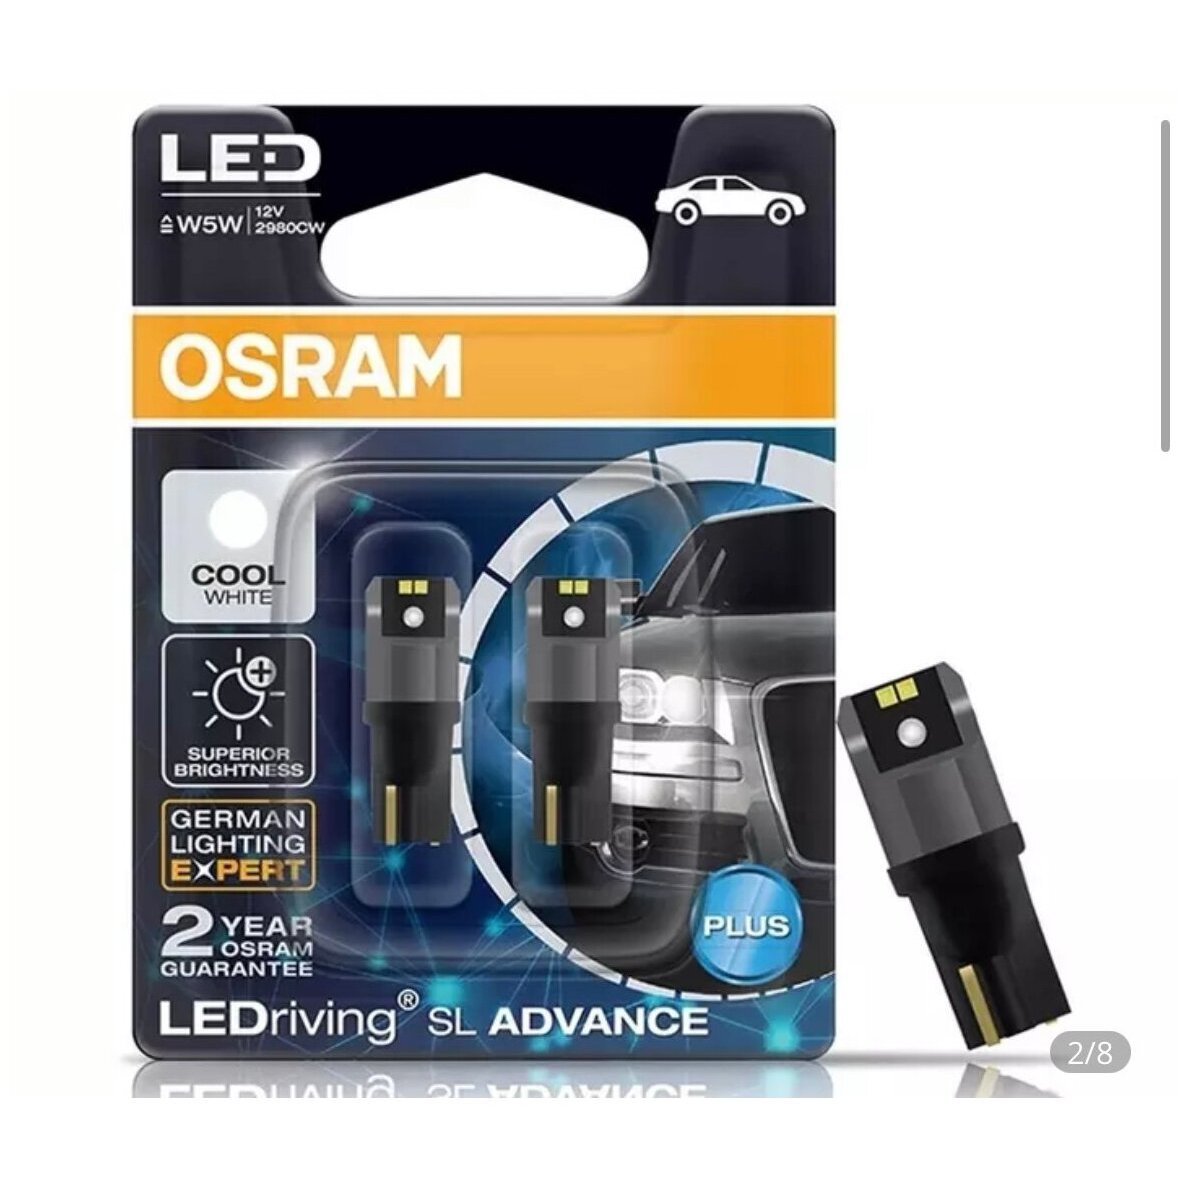   Osram W5W 12V 2980CW-02B LED w2.1x9.5d 1.5W